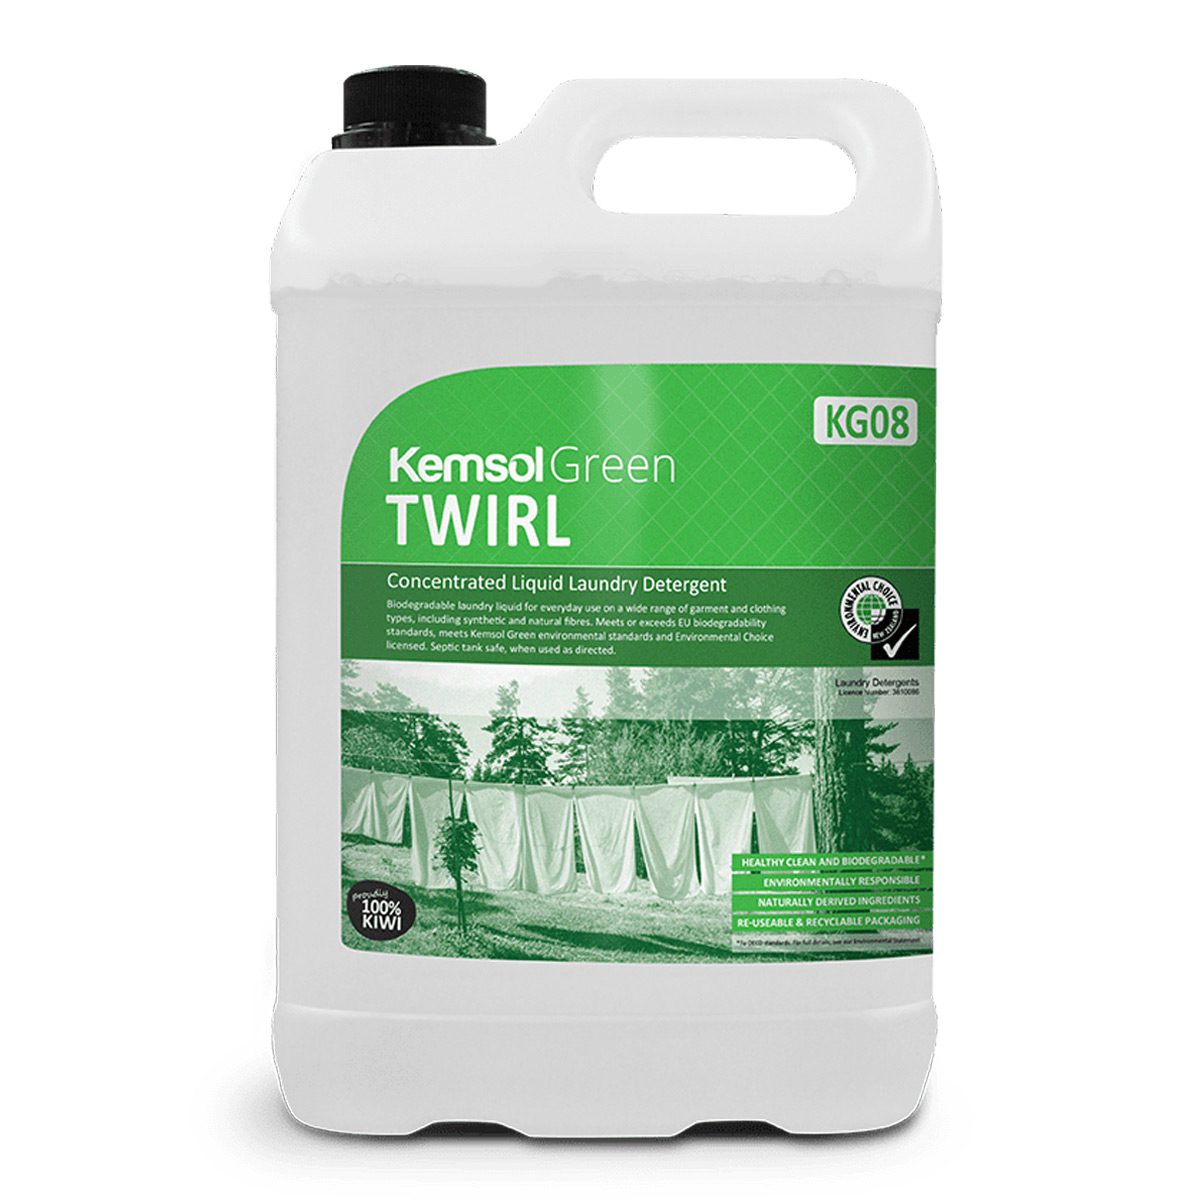 cleaning-products-environmental-kemsol-green-twirl-liquid-laundry-detergent-5L-litre-biodegradable-for-garment-clothing-synthetic-natural-fibres-EU-biodegradability-standards-vjs-distributors-KTWIRL